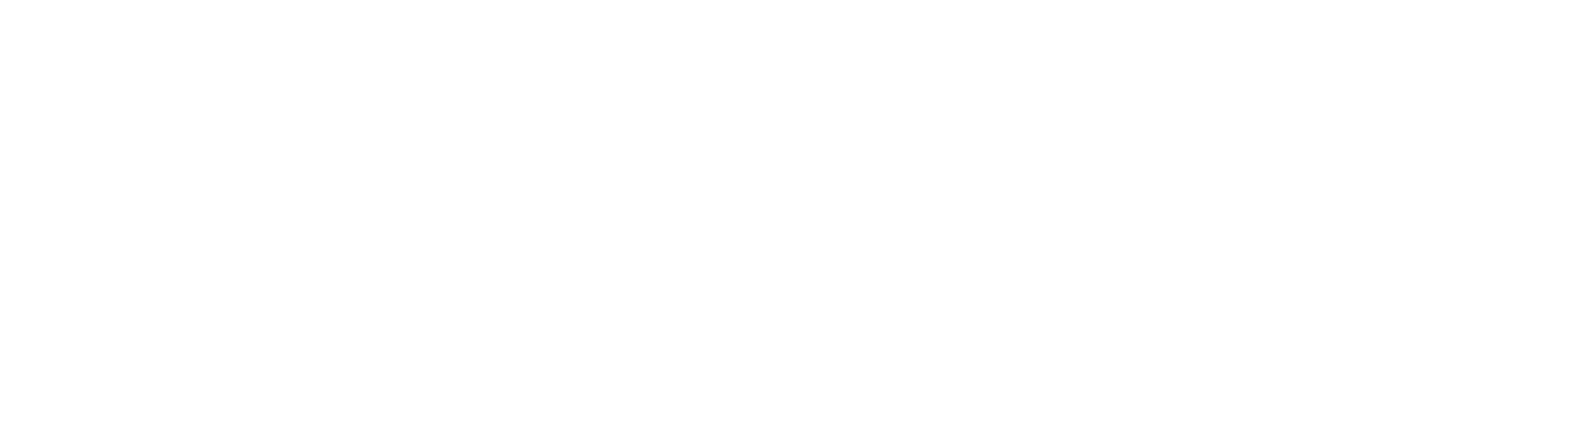 Tesco logo grand pour les fonds sombres (PNG transparent)